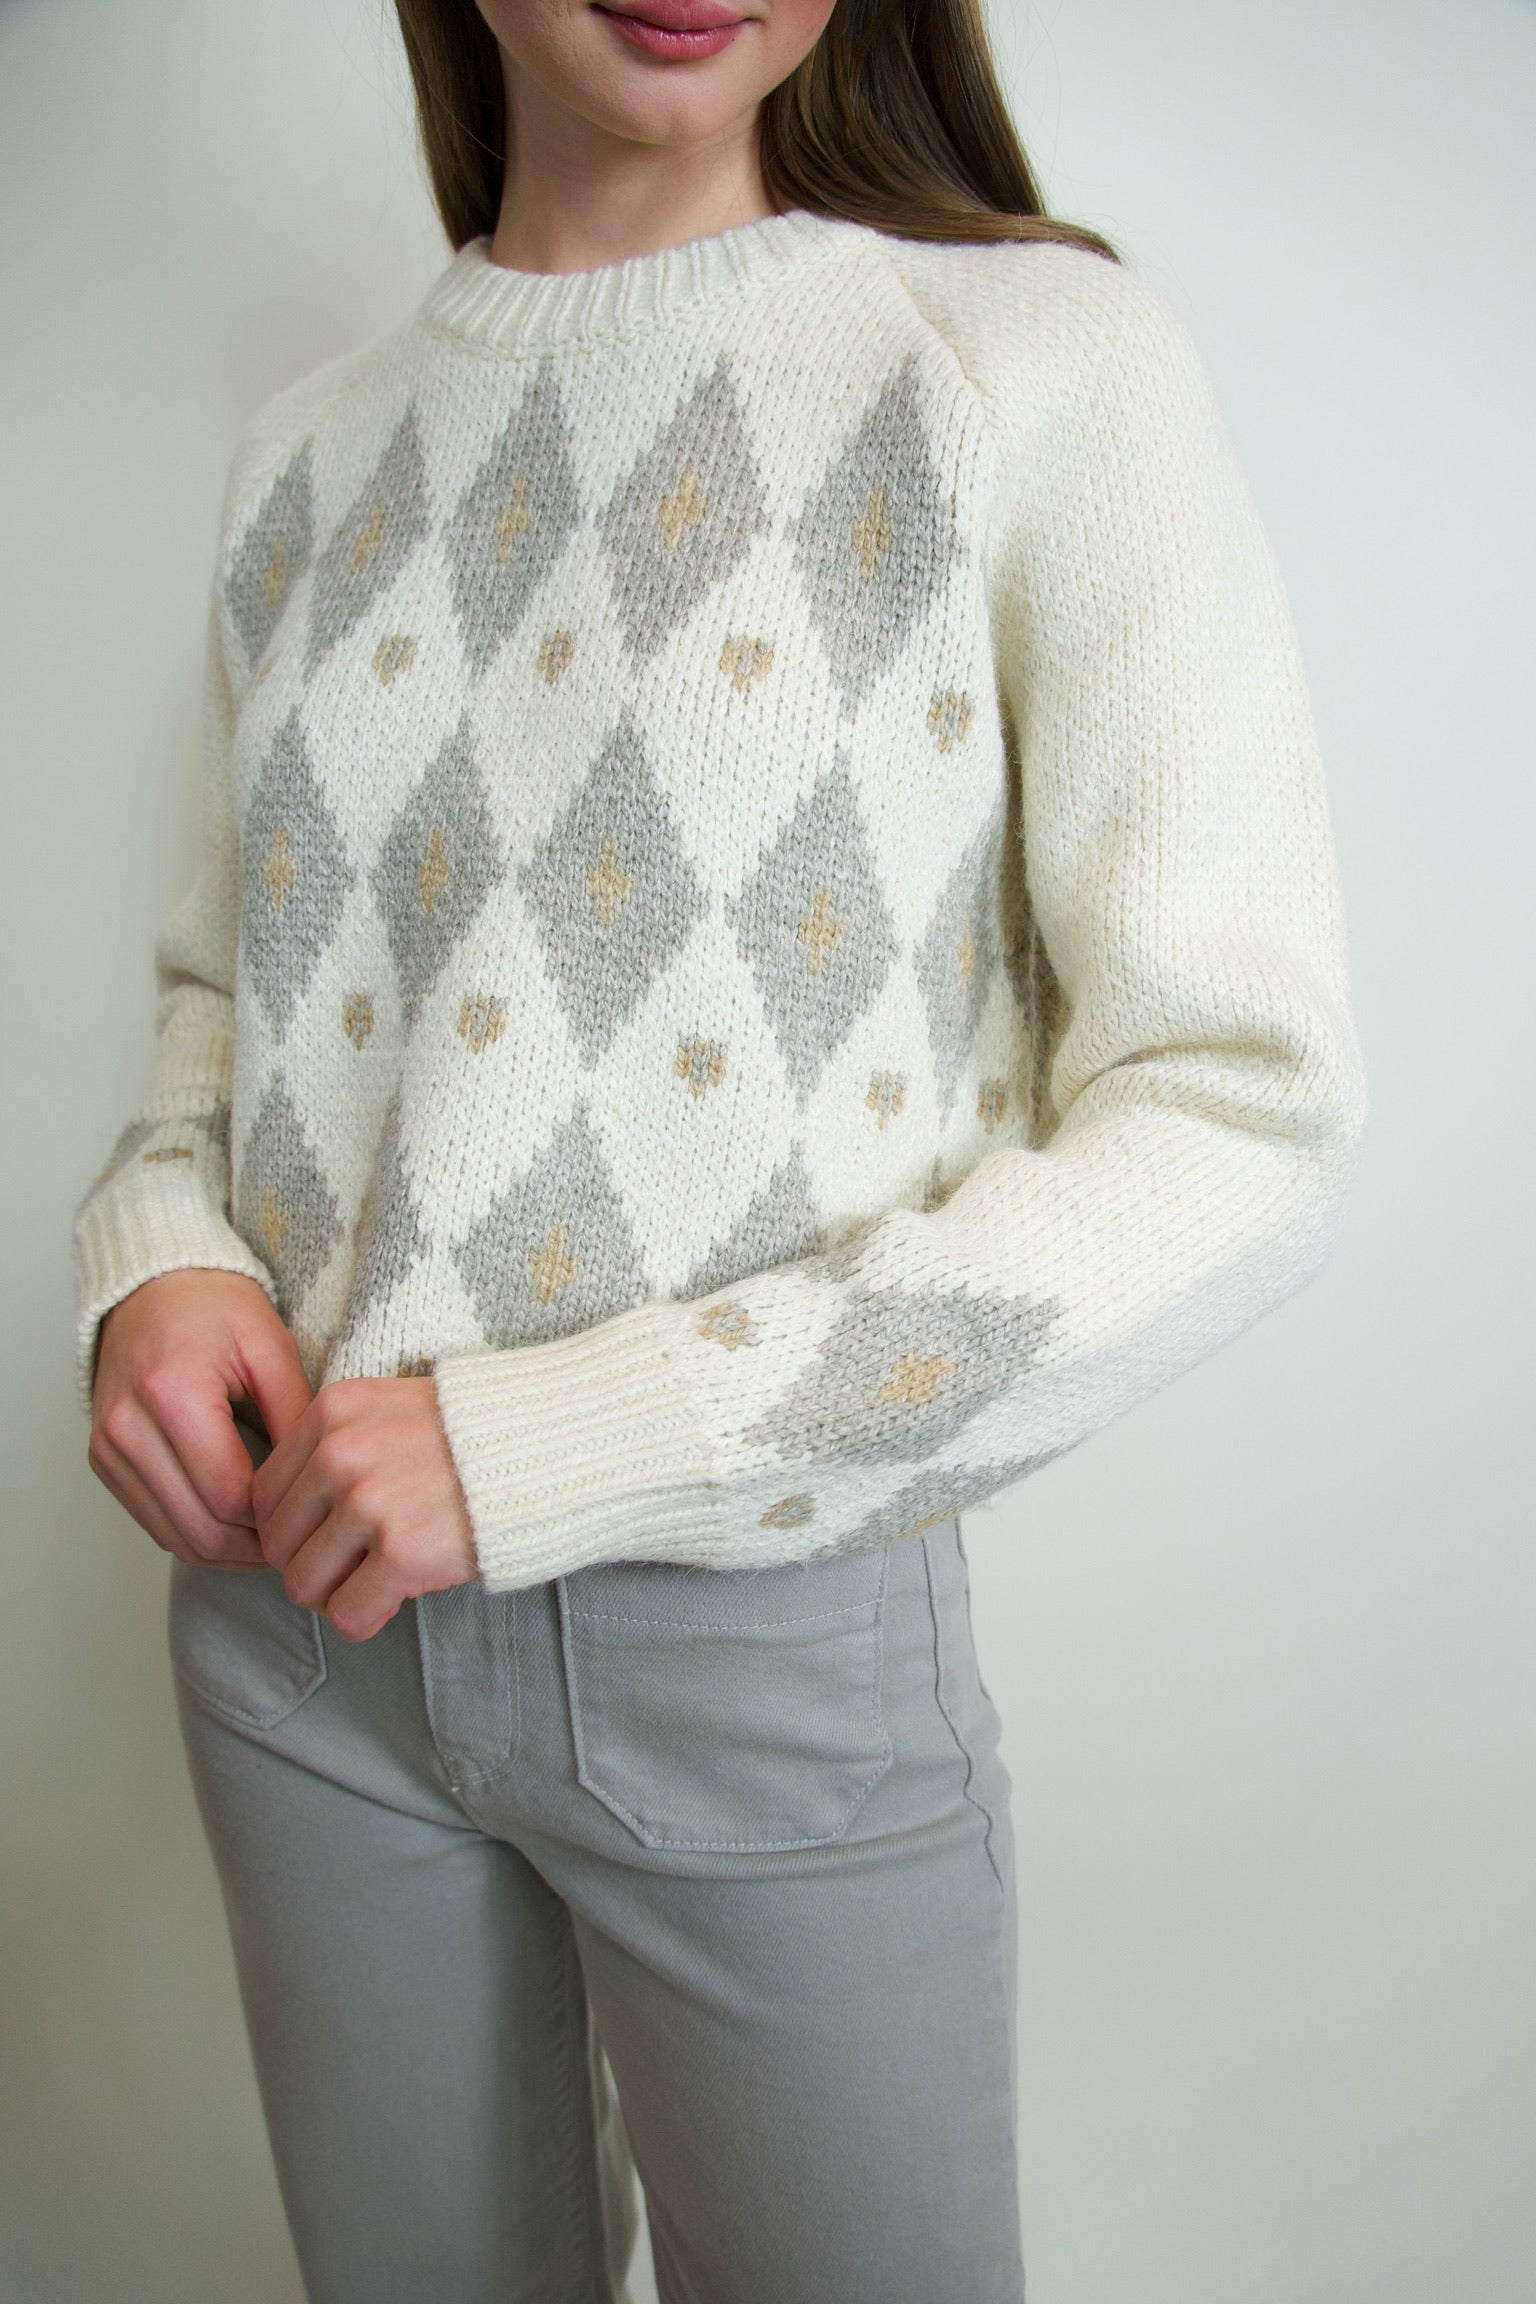 The Tanya Sweater